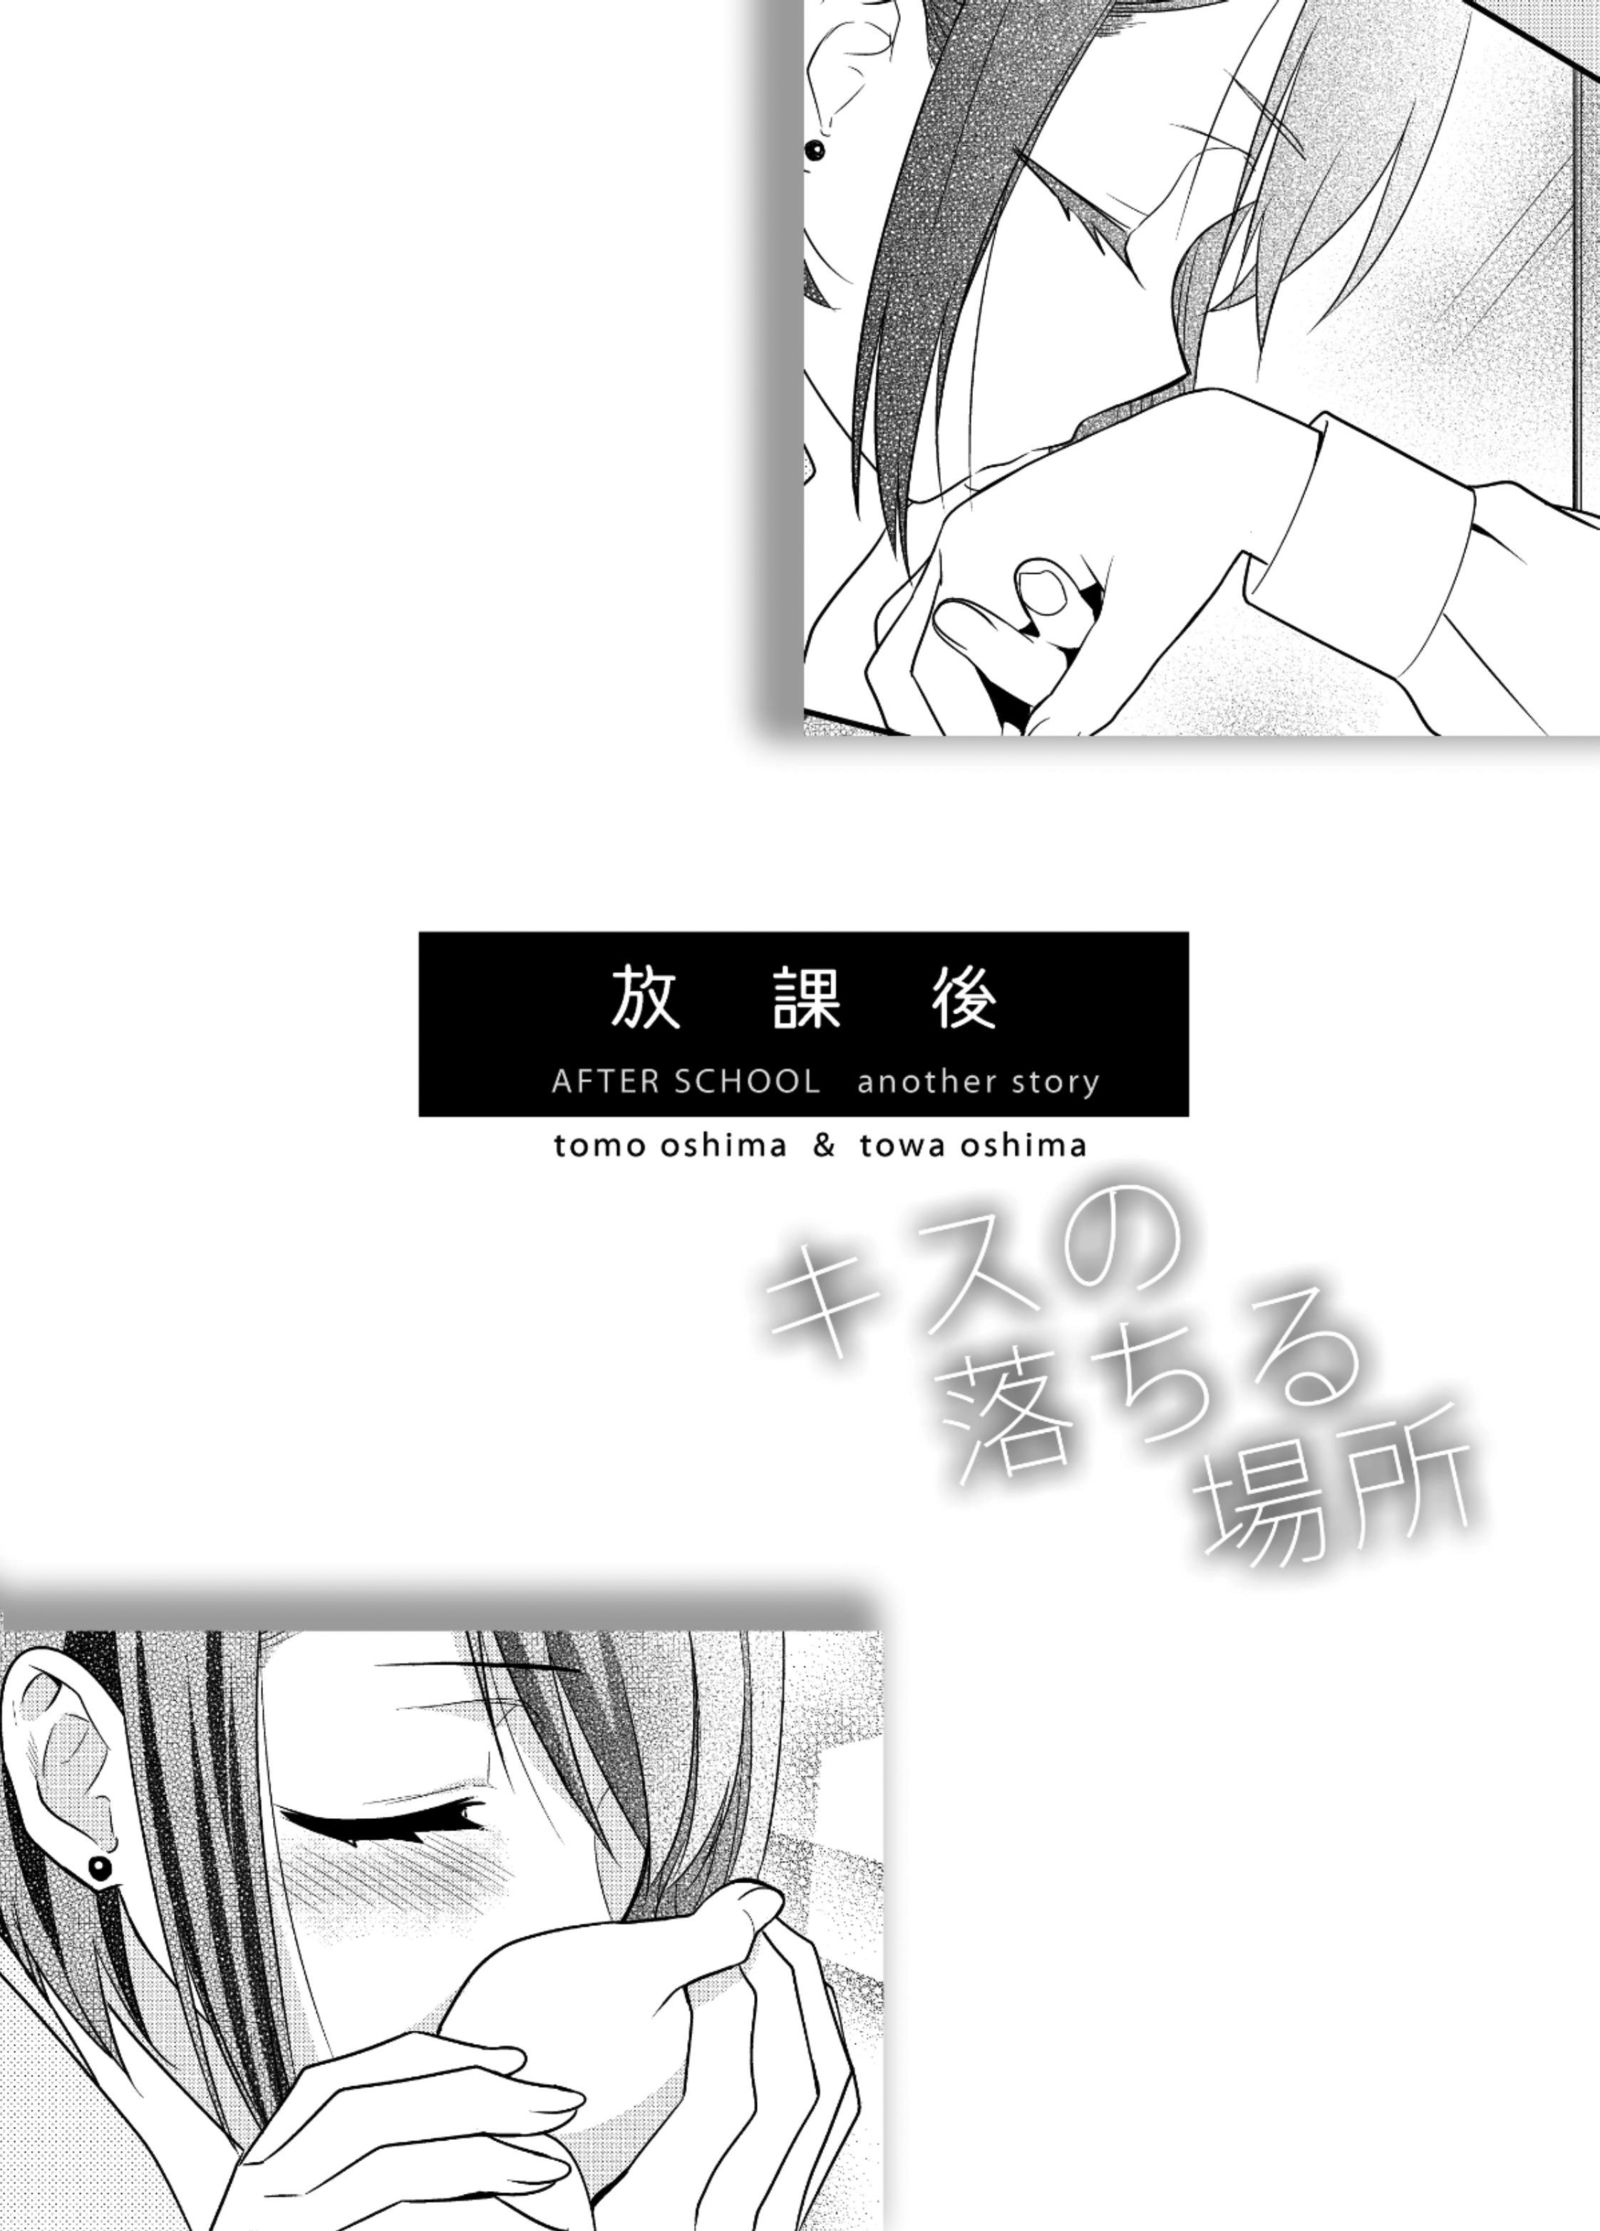 After School (Ooshima Tomo & Ooshima Towa) - Page 2